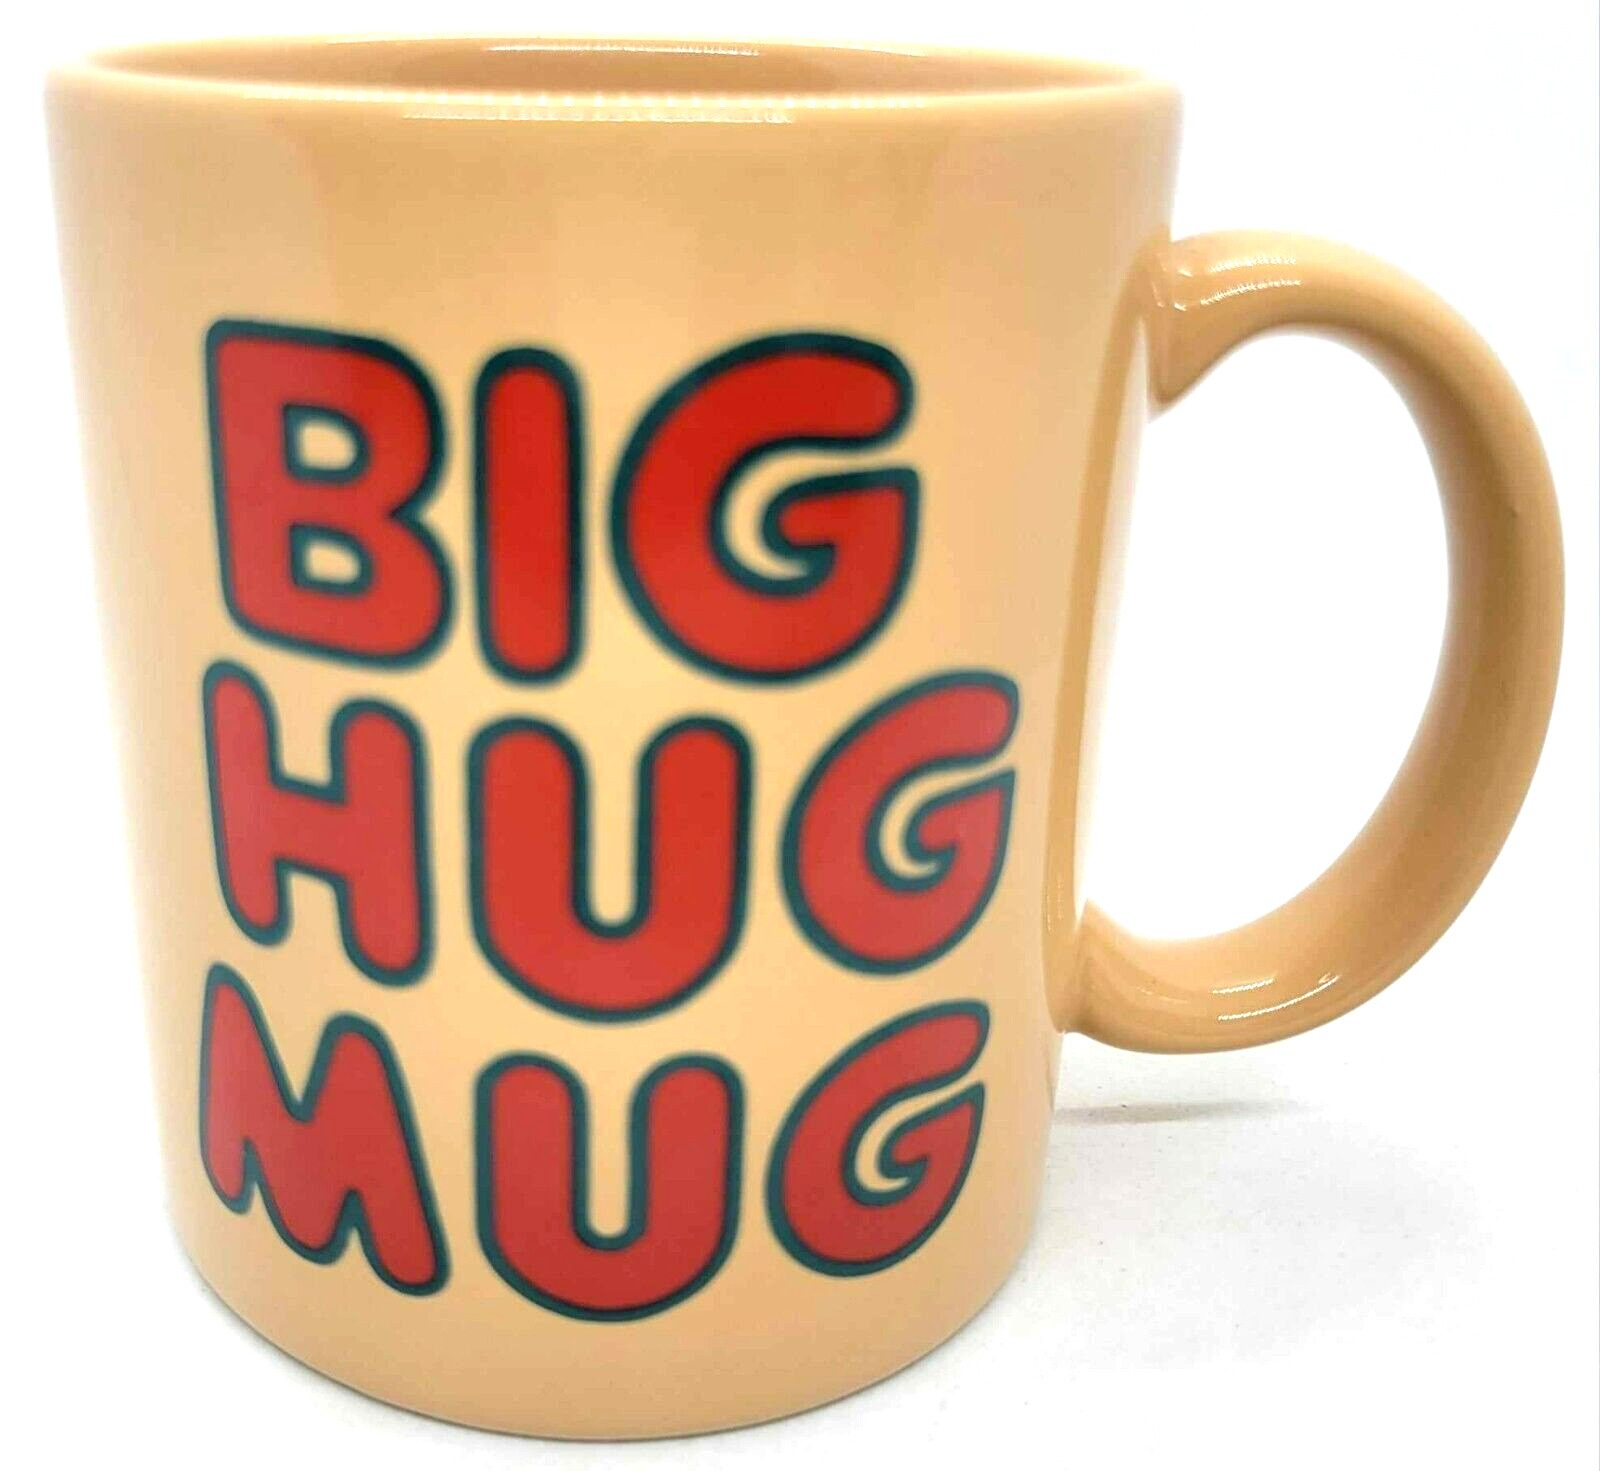 Big Hug Mug FTD Coffee Cup - Vintage